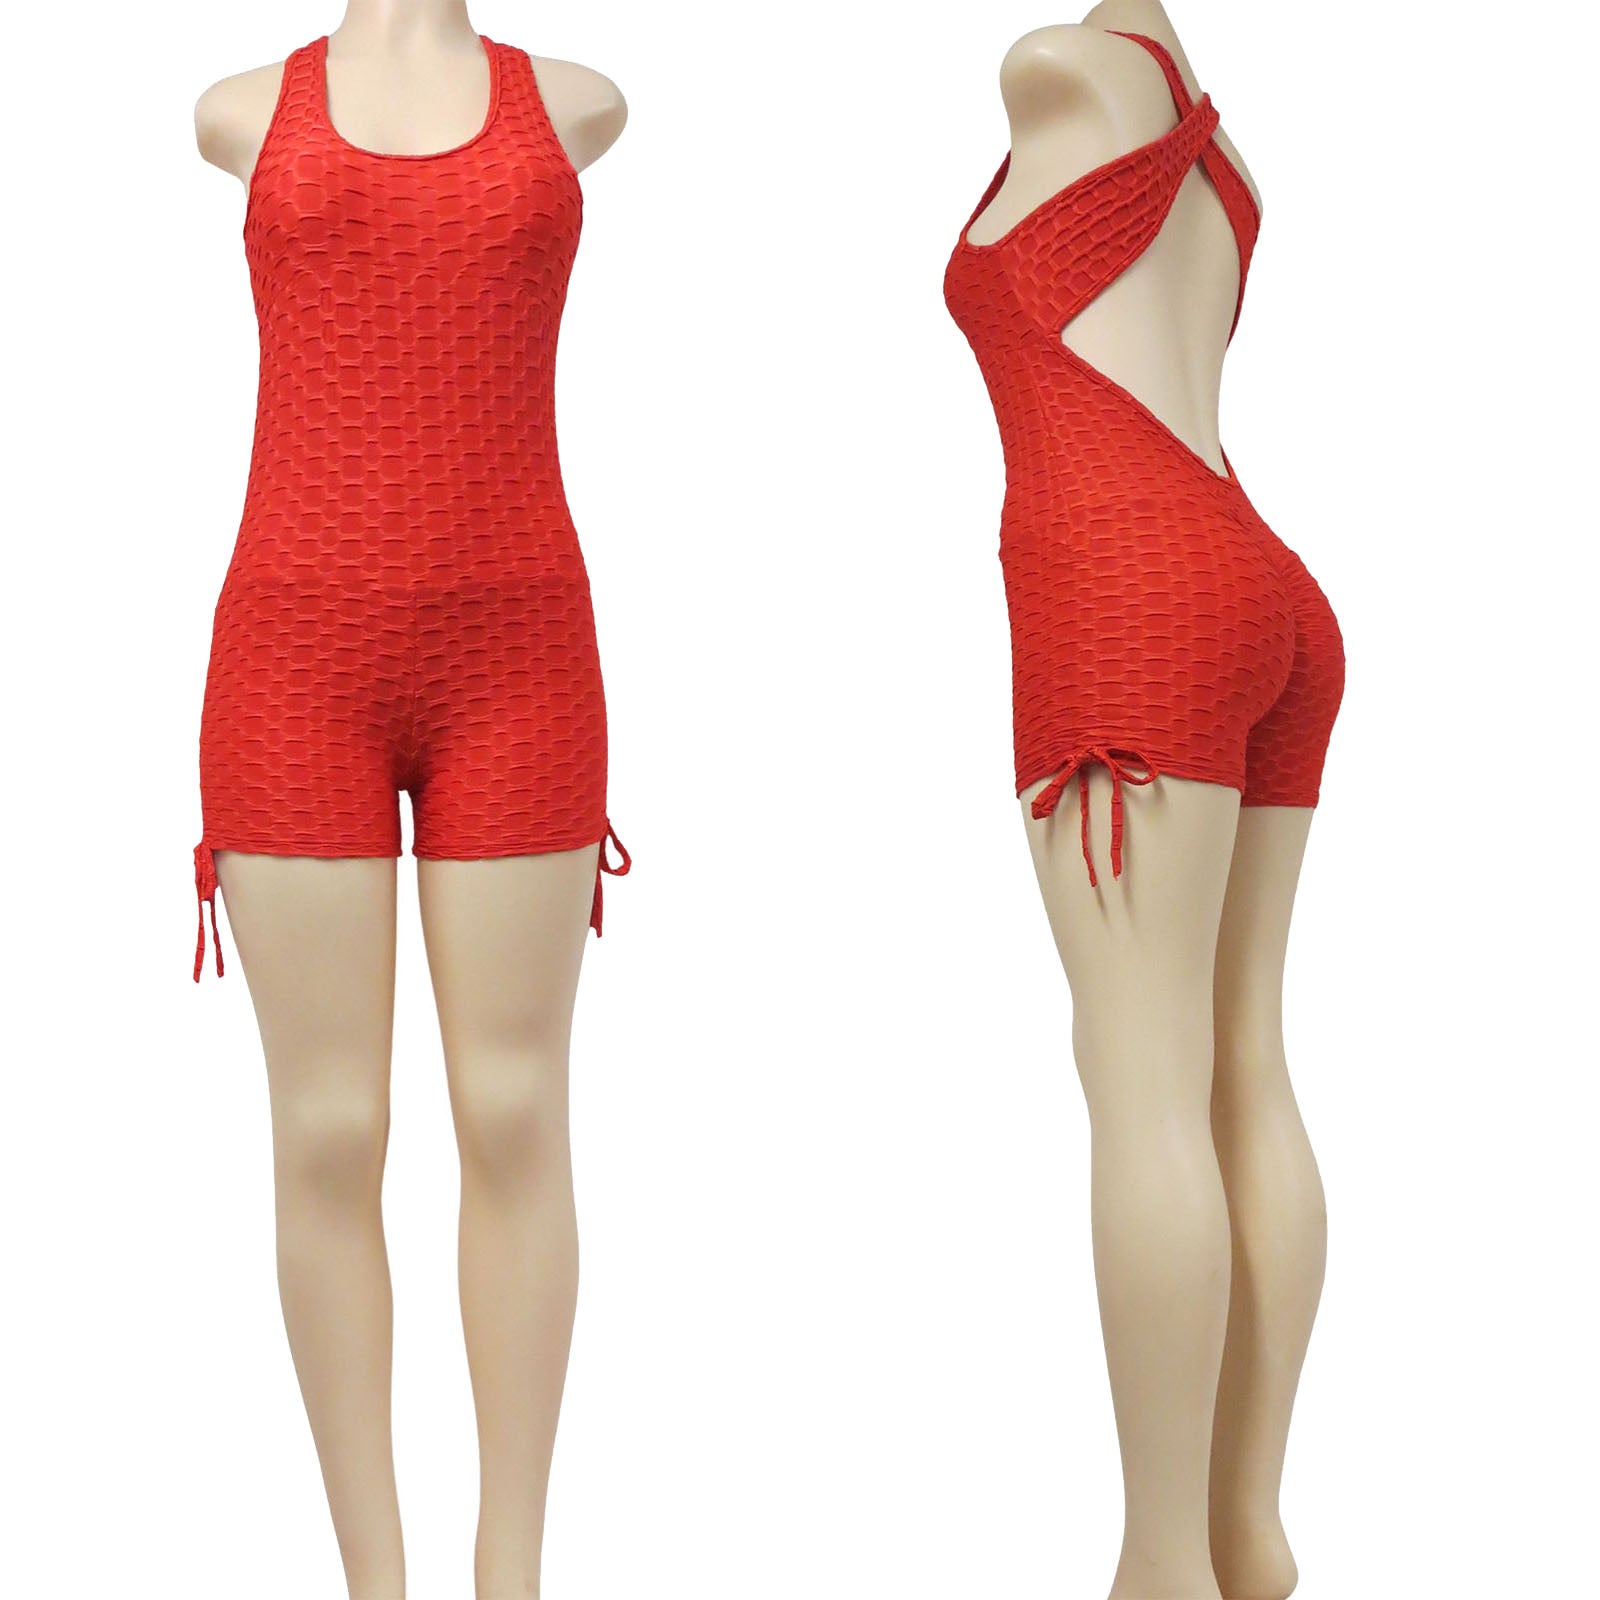 Wholesales Sleeveless Jumper Body Suit Women